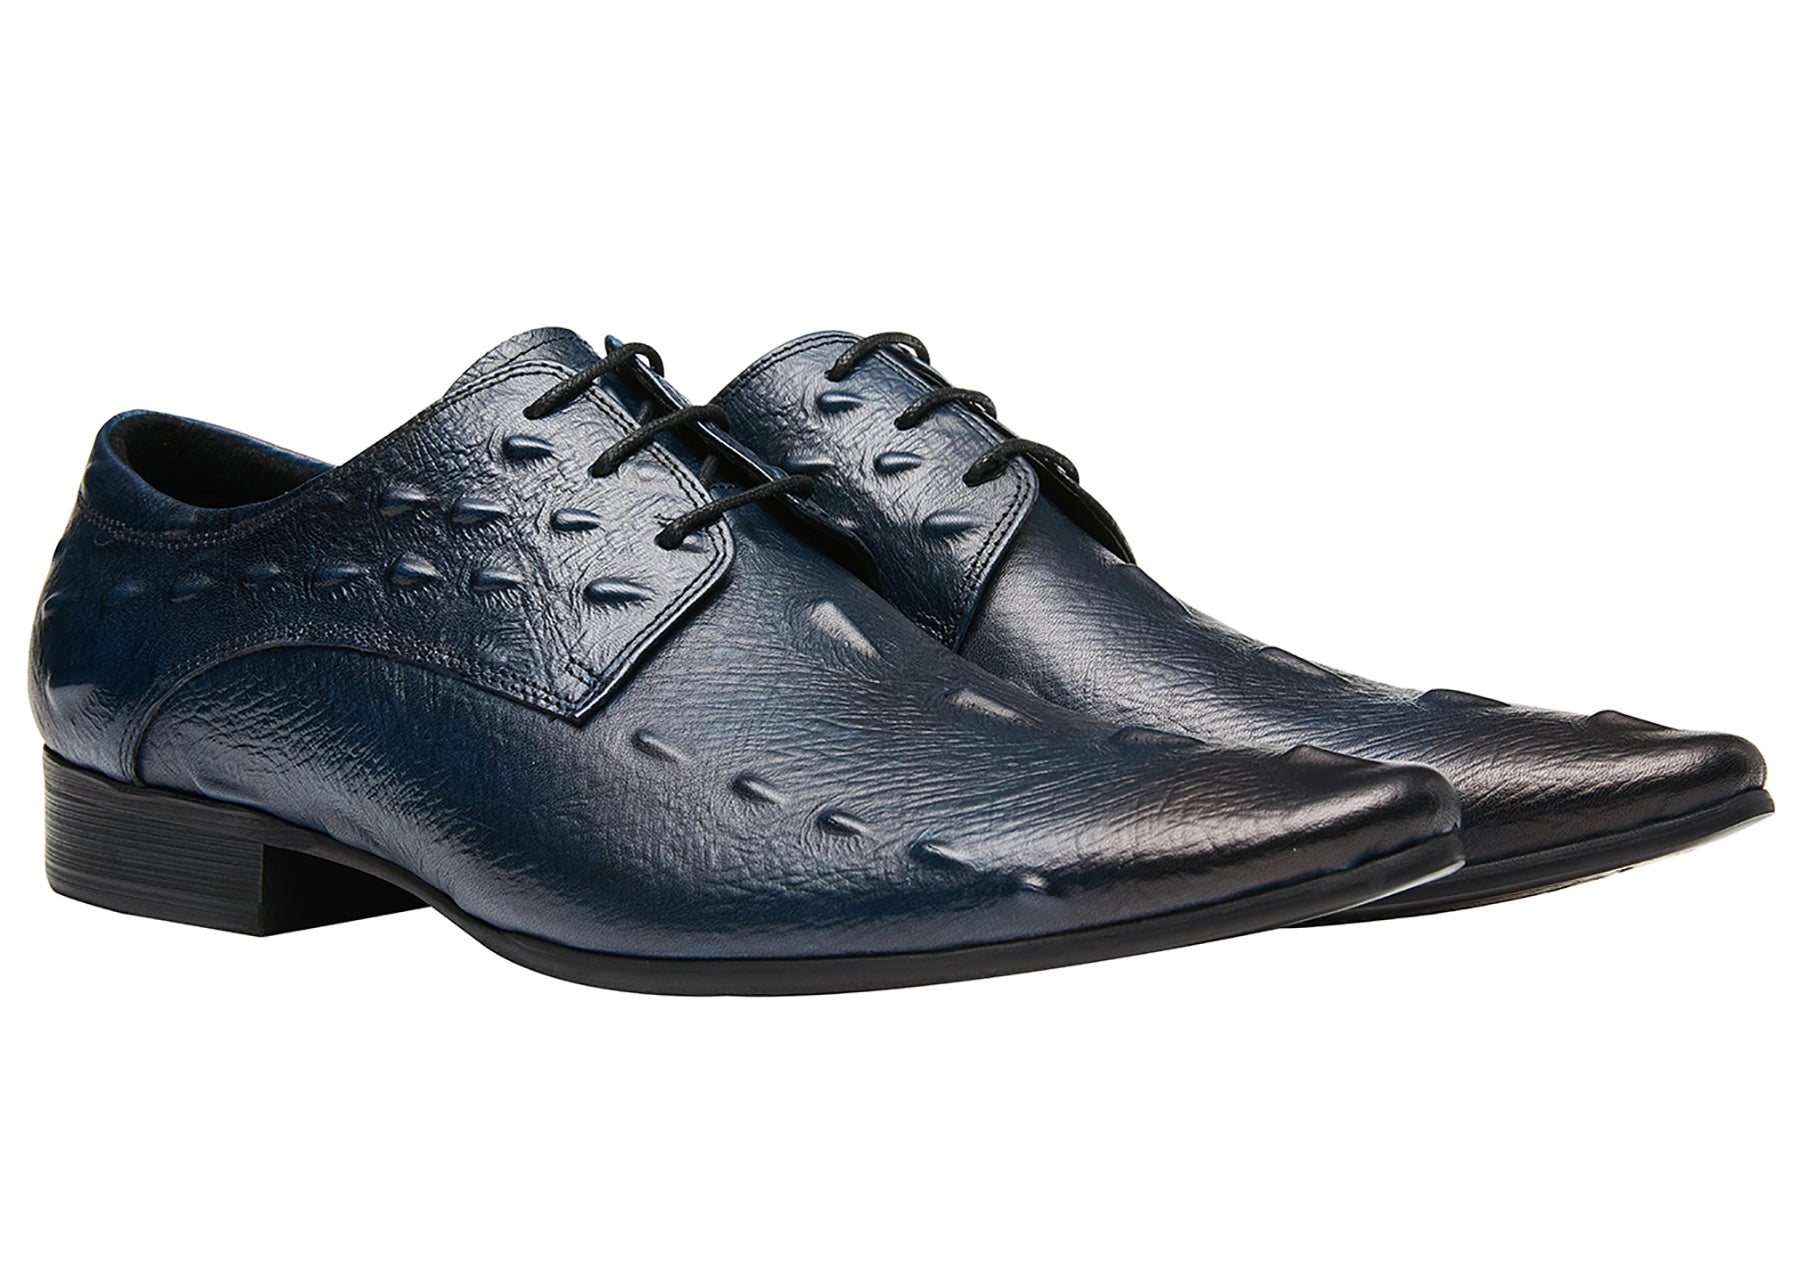 Men's Alligator Pointed Toe Derby Shoes